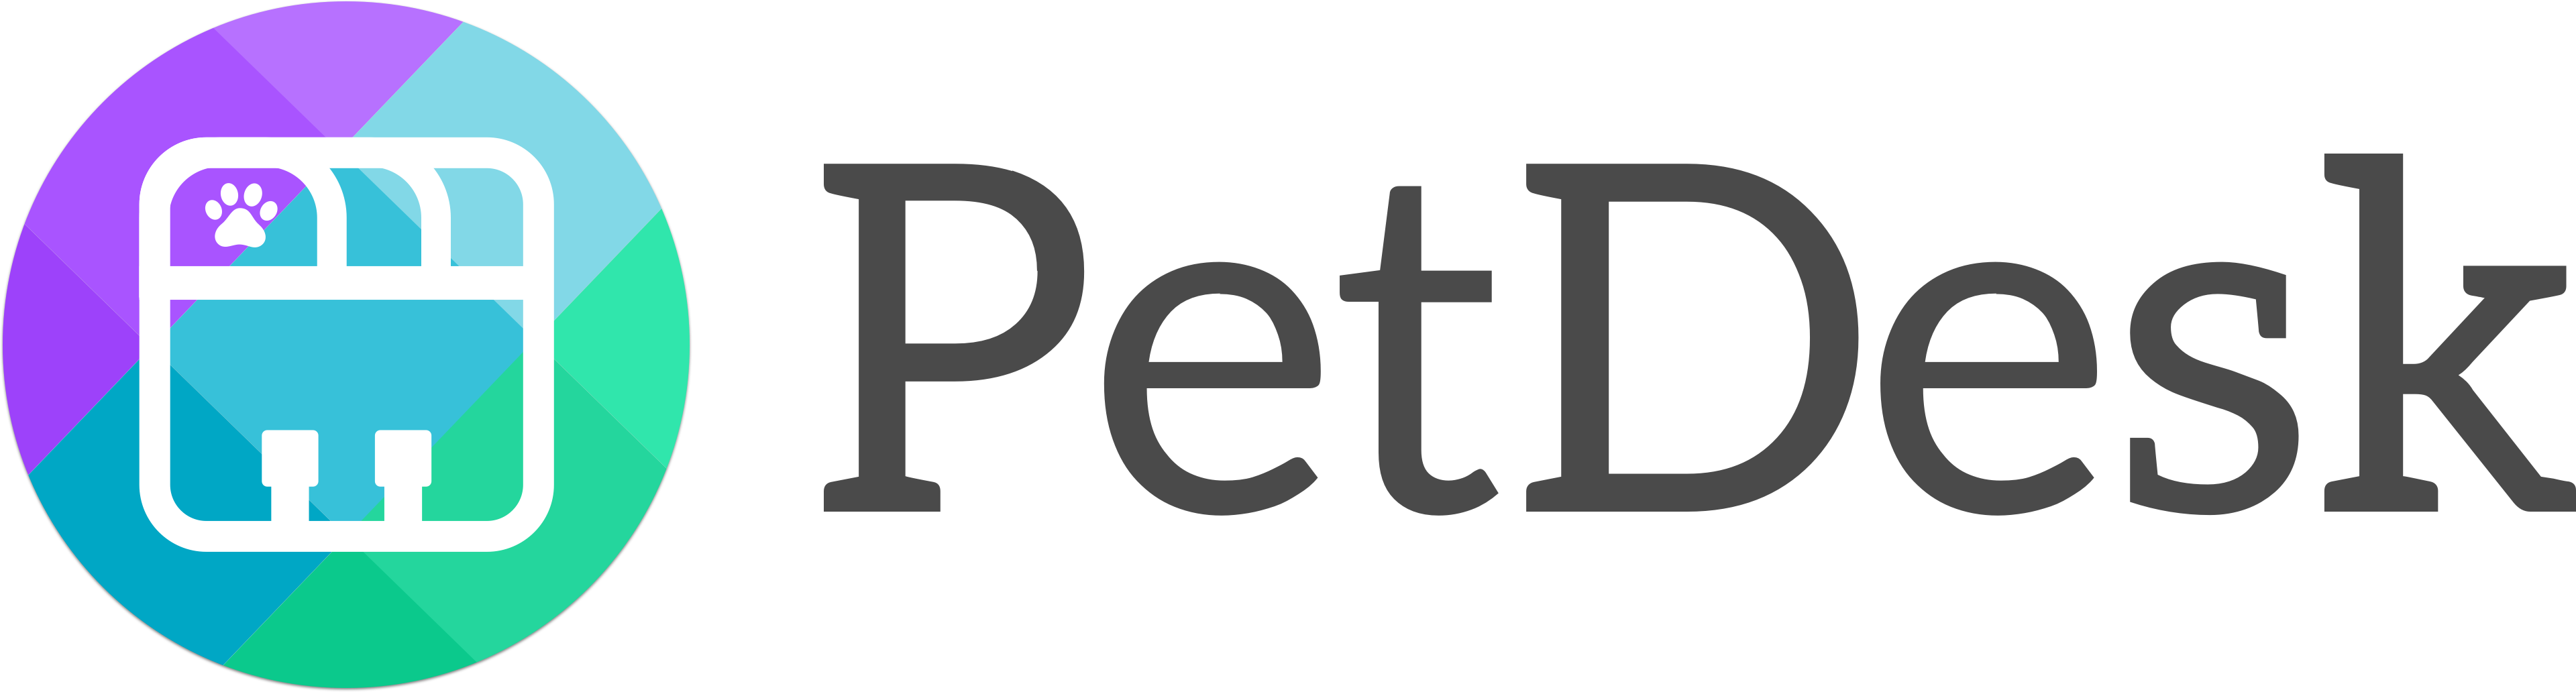 Primary-PetDesk-Logo